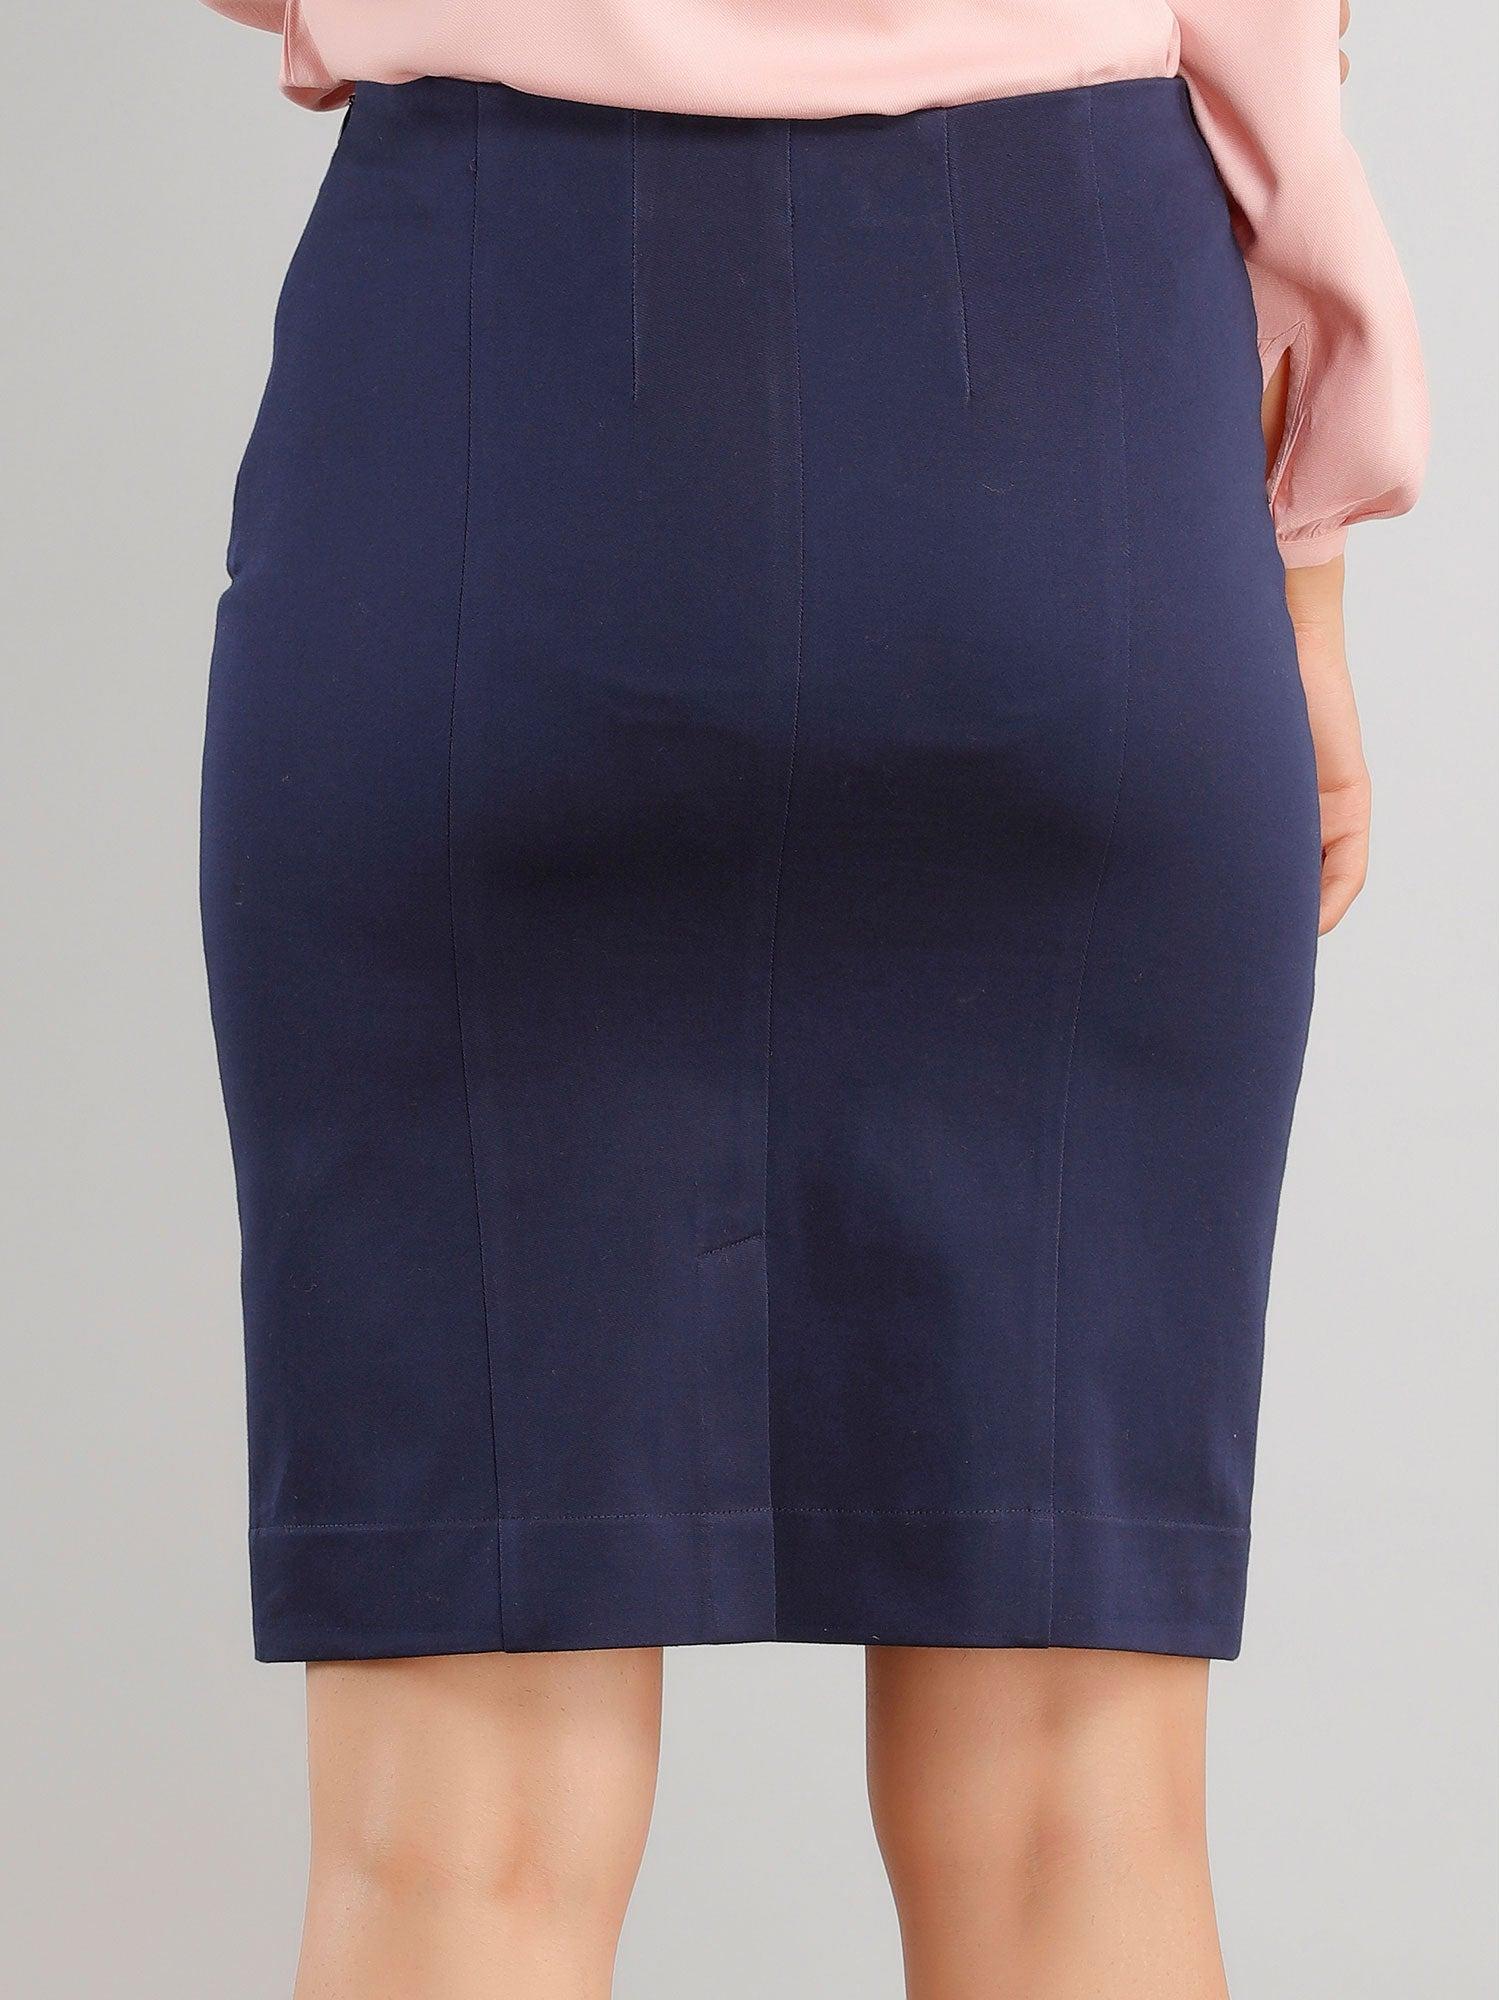 Classic Pencil Skirt - Blue| Formal Skirts